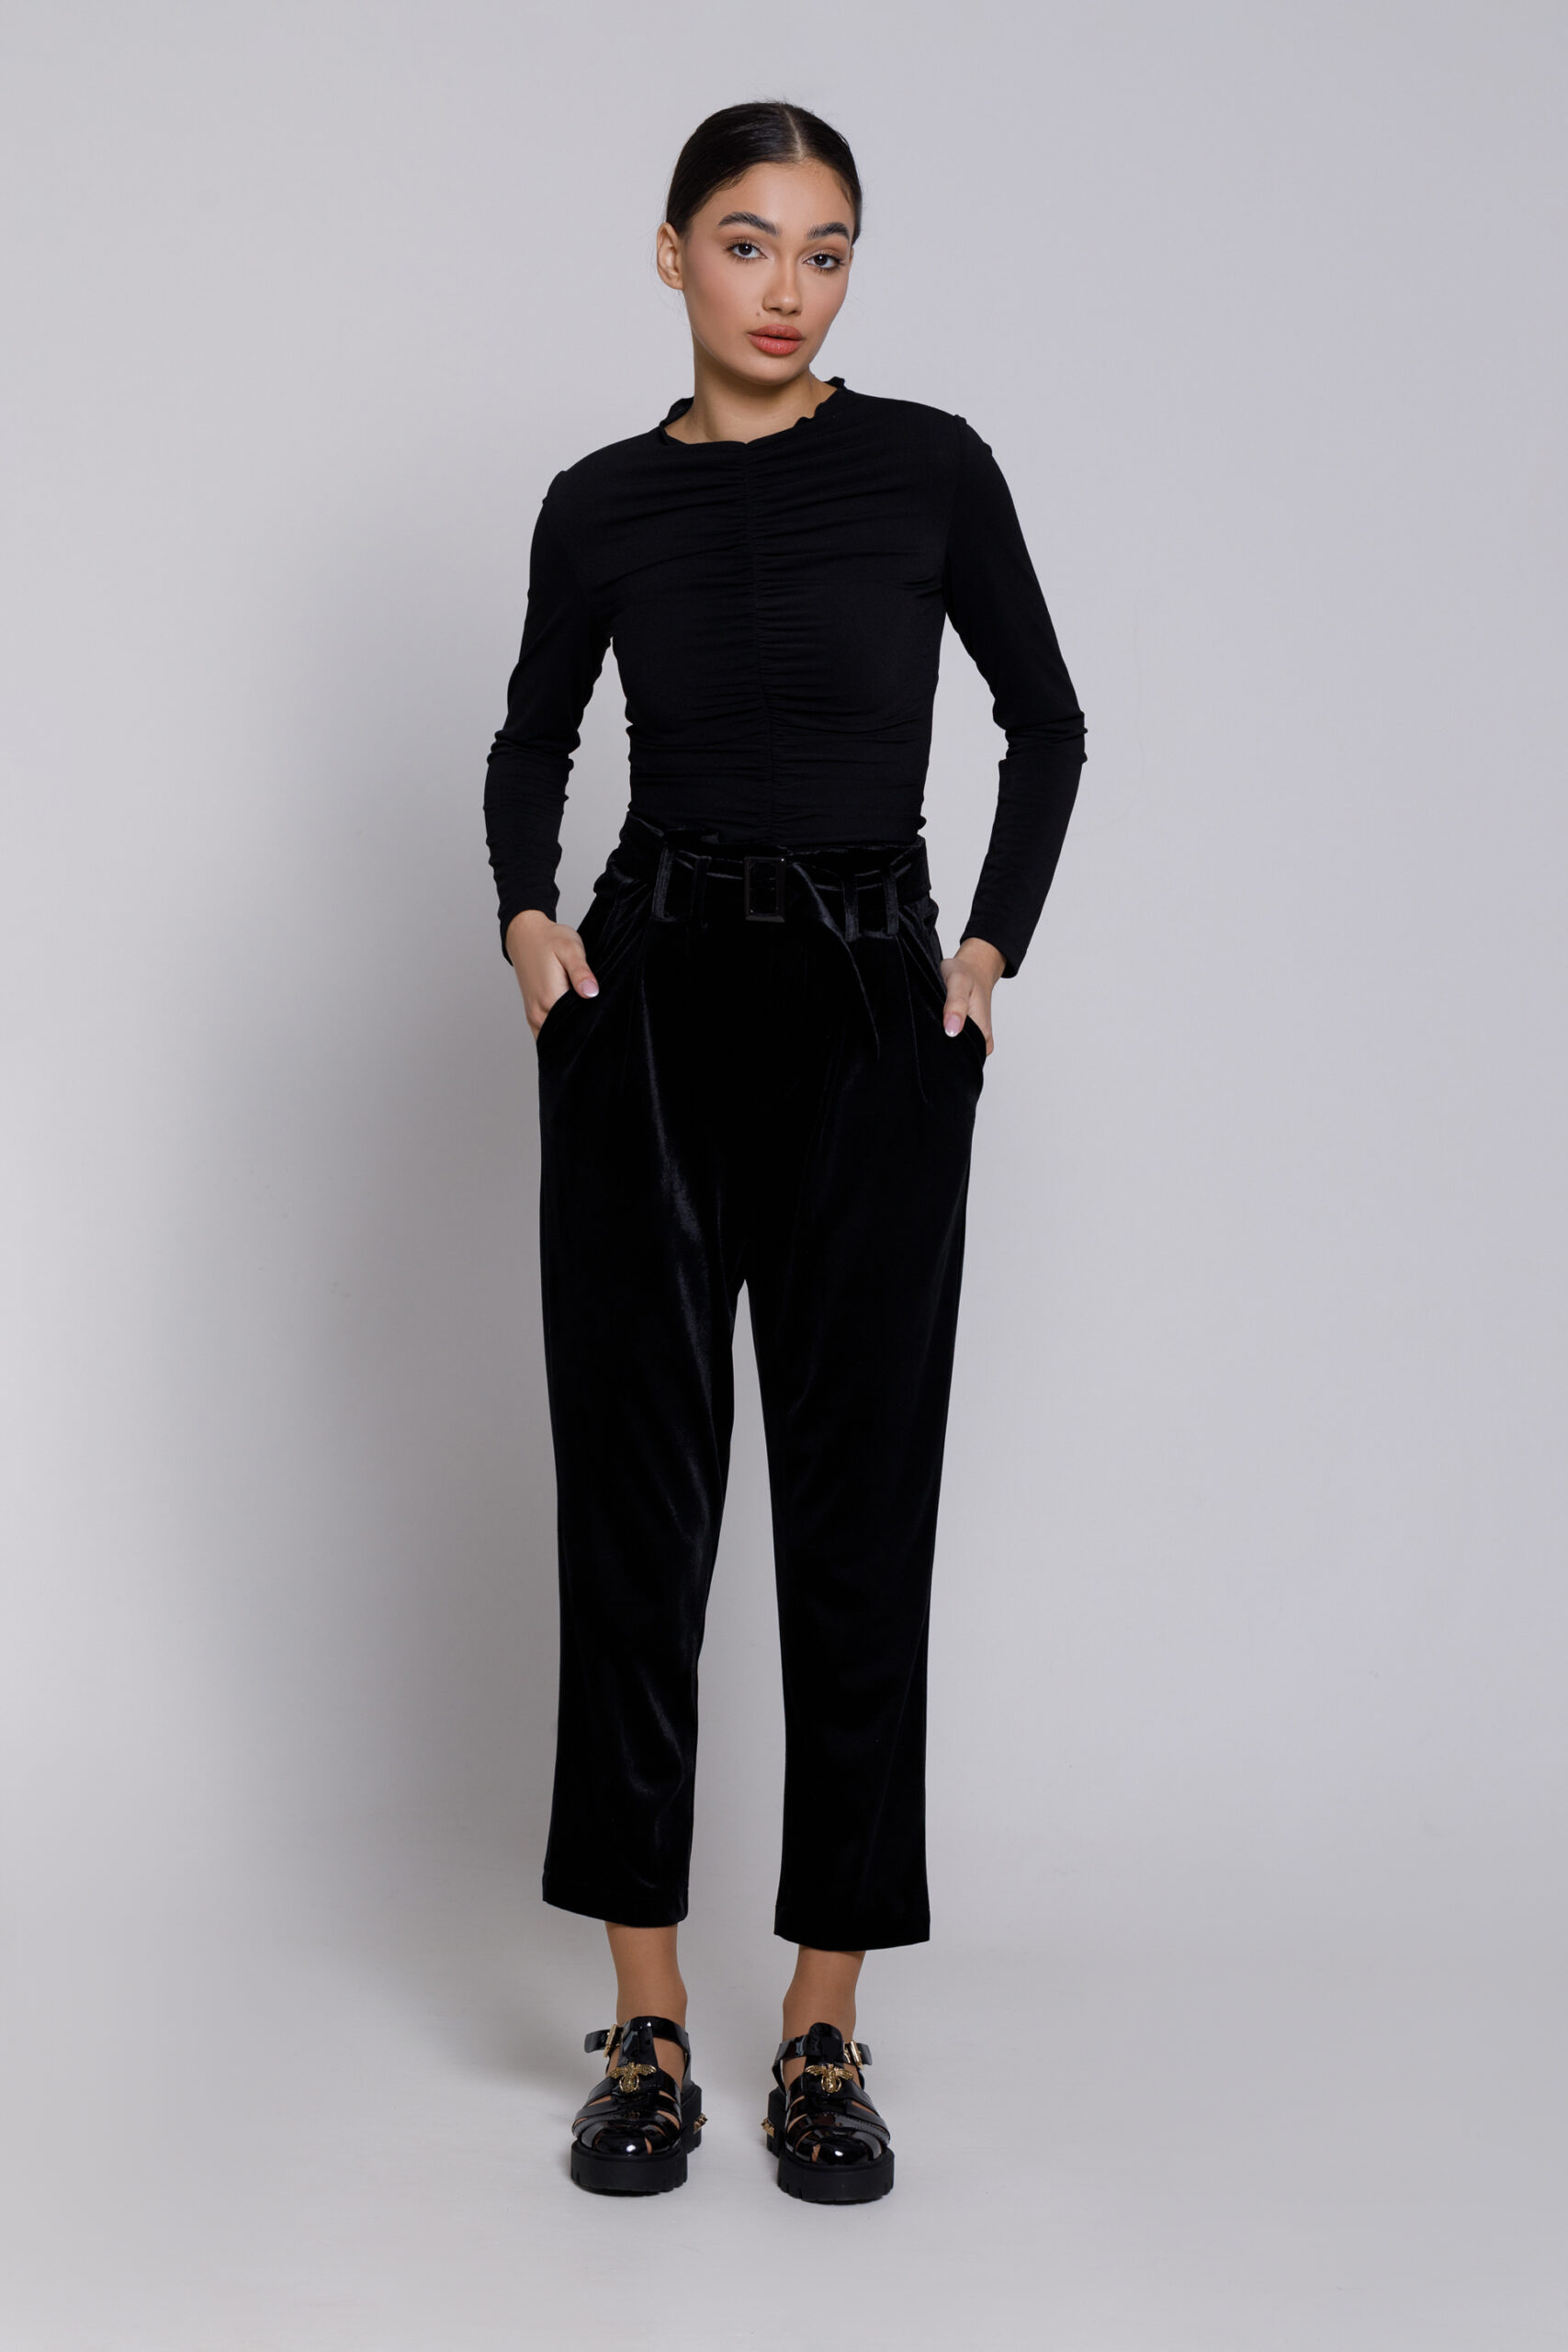 CARMEN black velvet pants with belt. Natural fabrics, original design, handmade embroidery